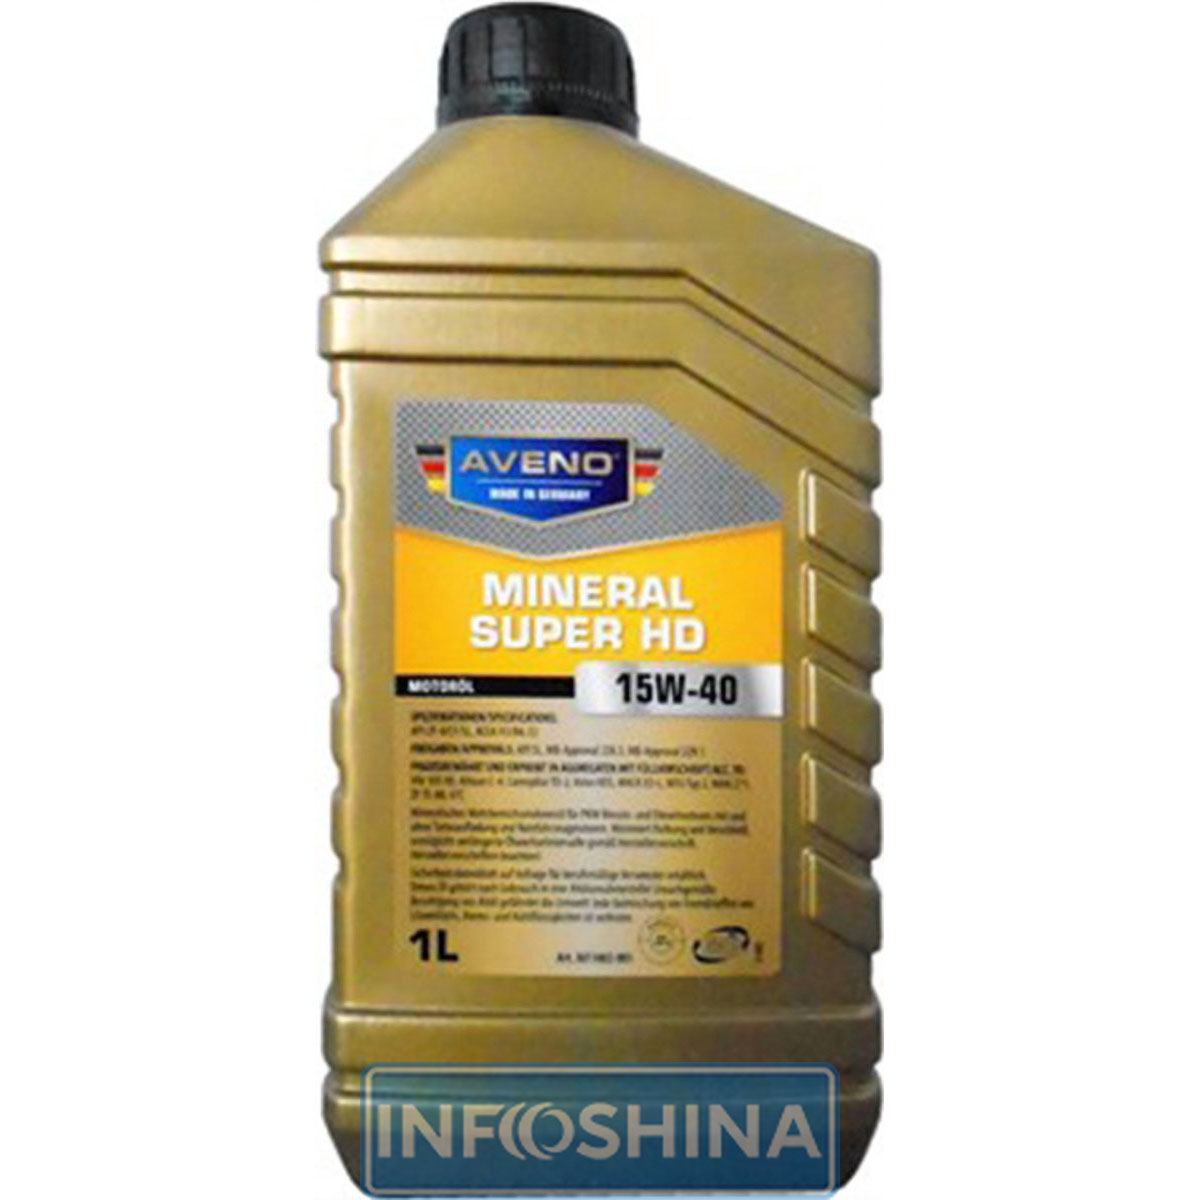 Купить масло AVENO Mineral Super HD 15W-40 (1л)